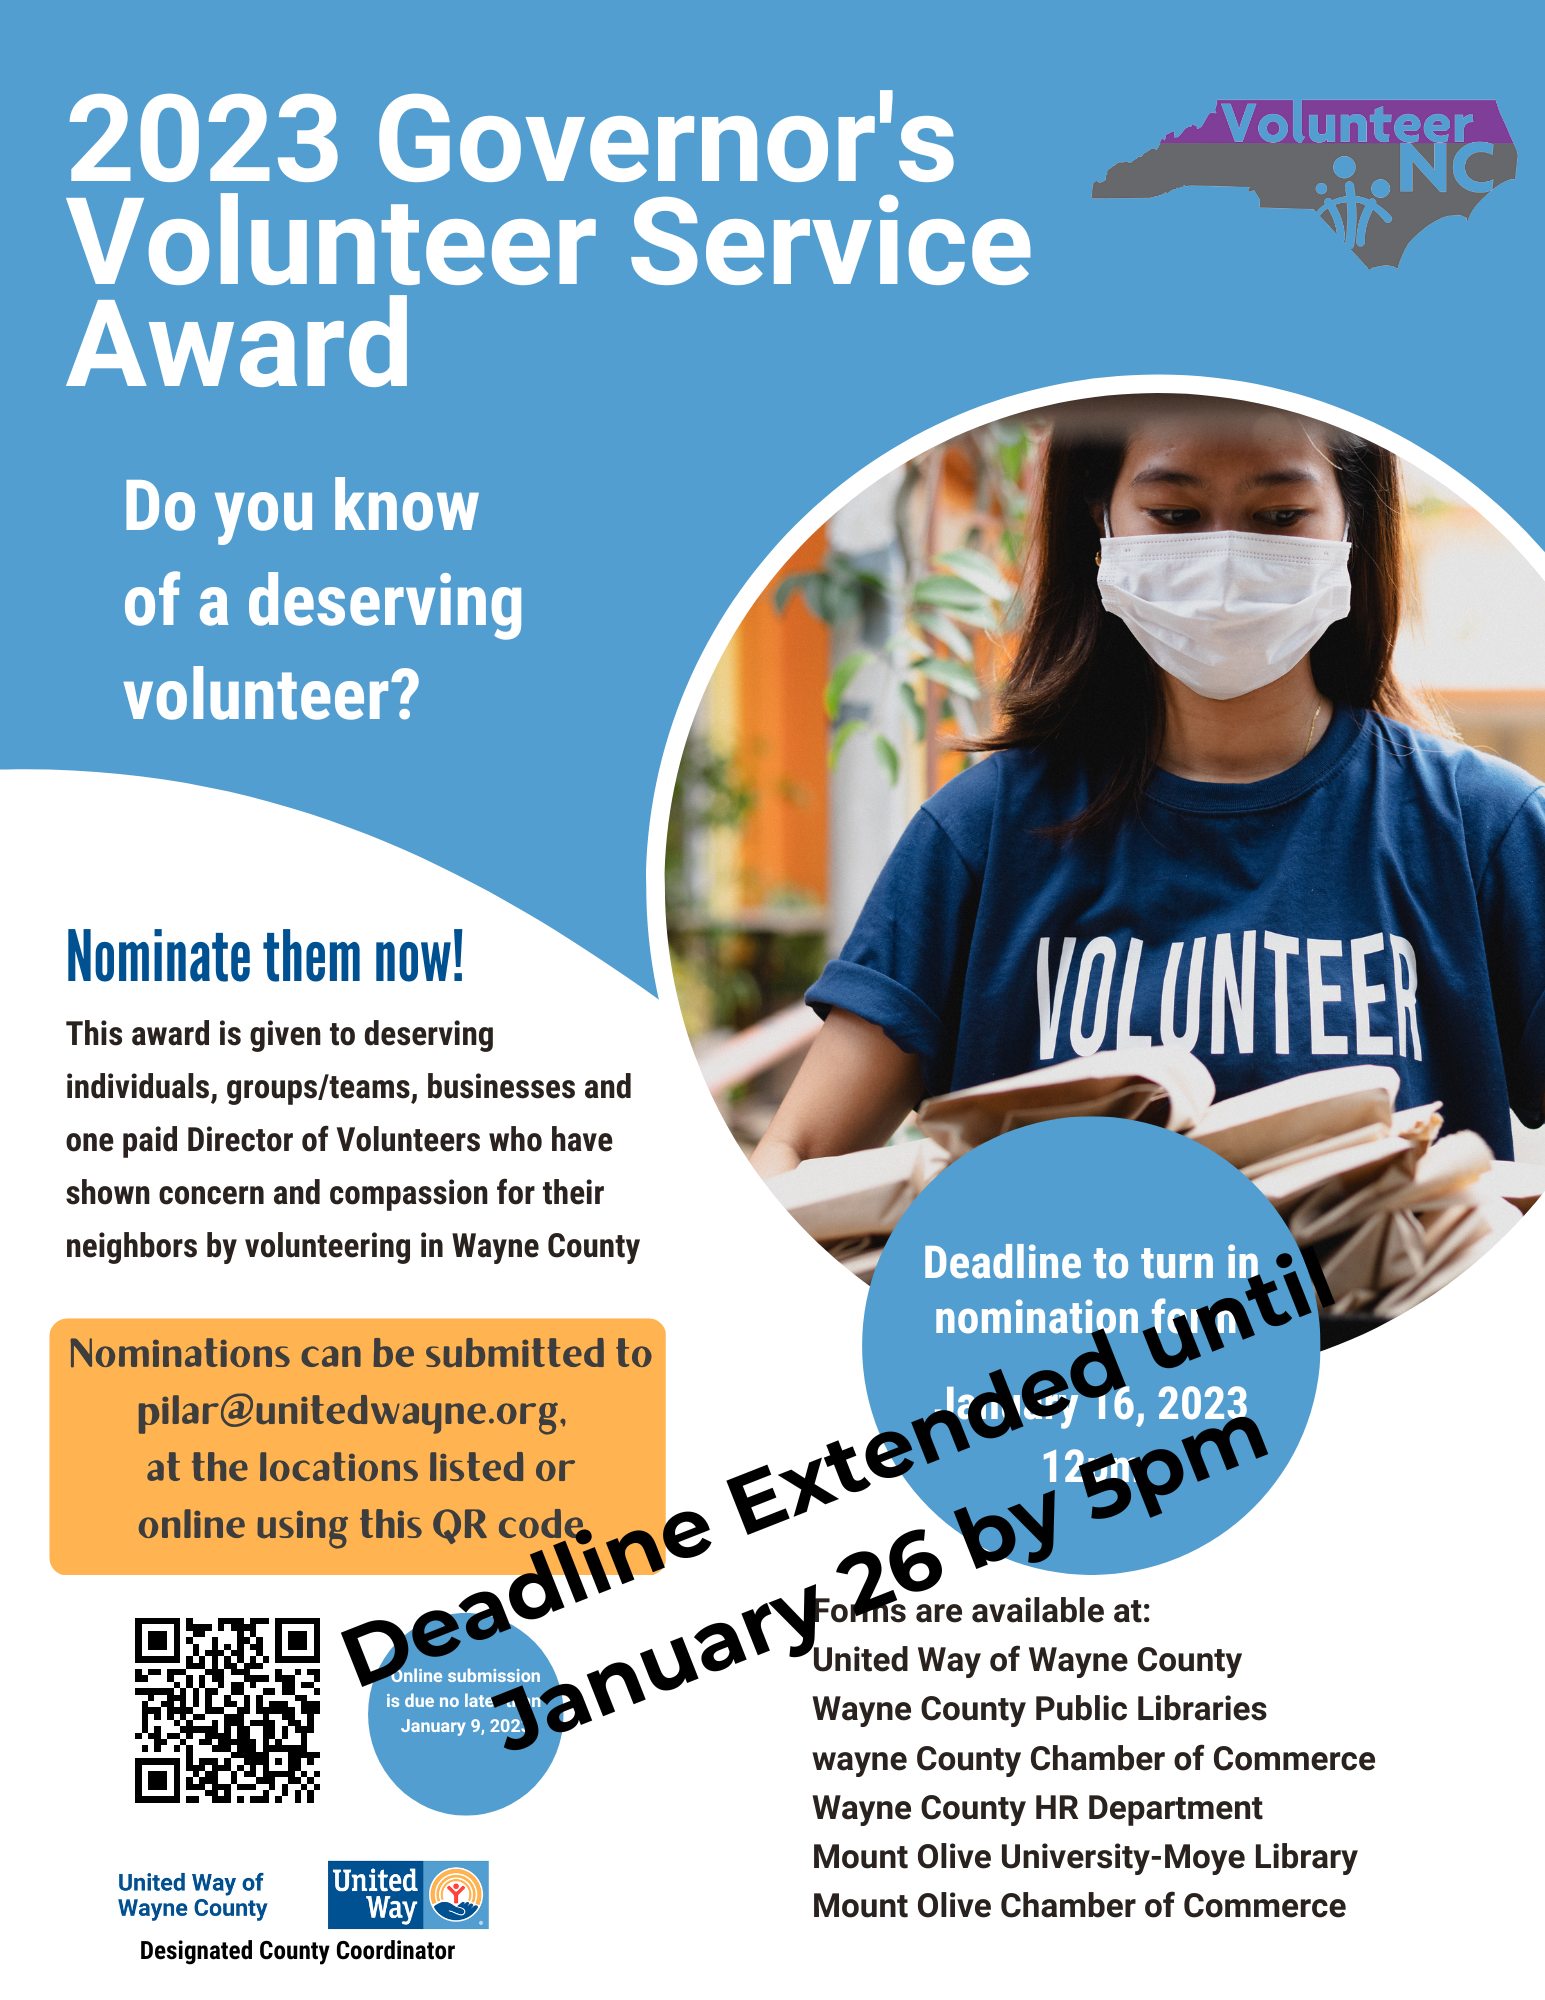 Governor’s Volunteer Service Award-Deadline Extended